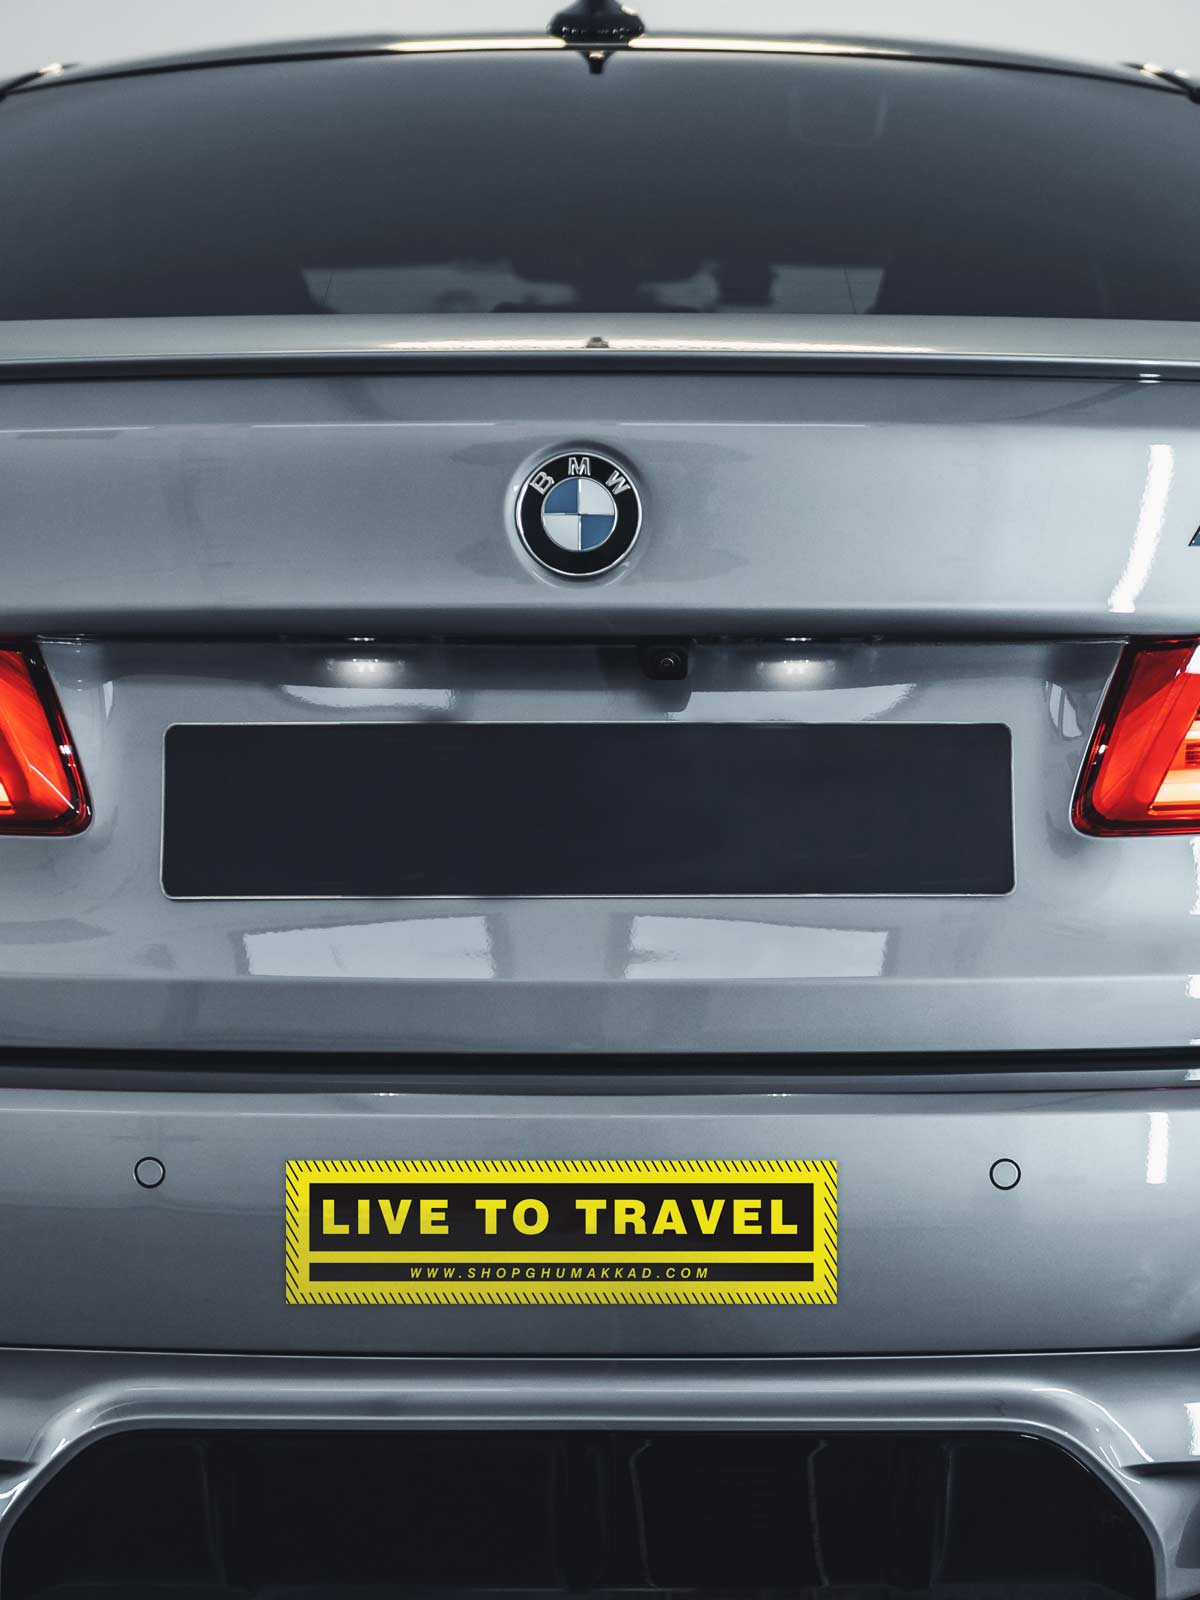 Live to travel Vinyl Sticker by shopghumakkad | Laptop Stickers | Bumper Stickers | Car Stickers | Bike Stickers